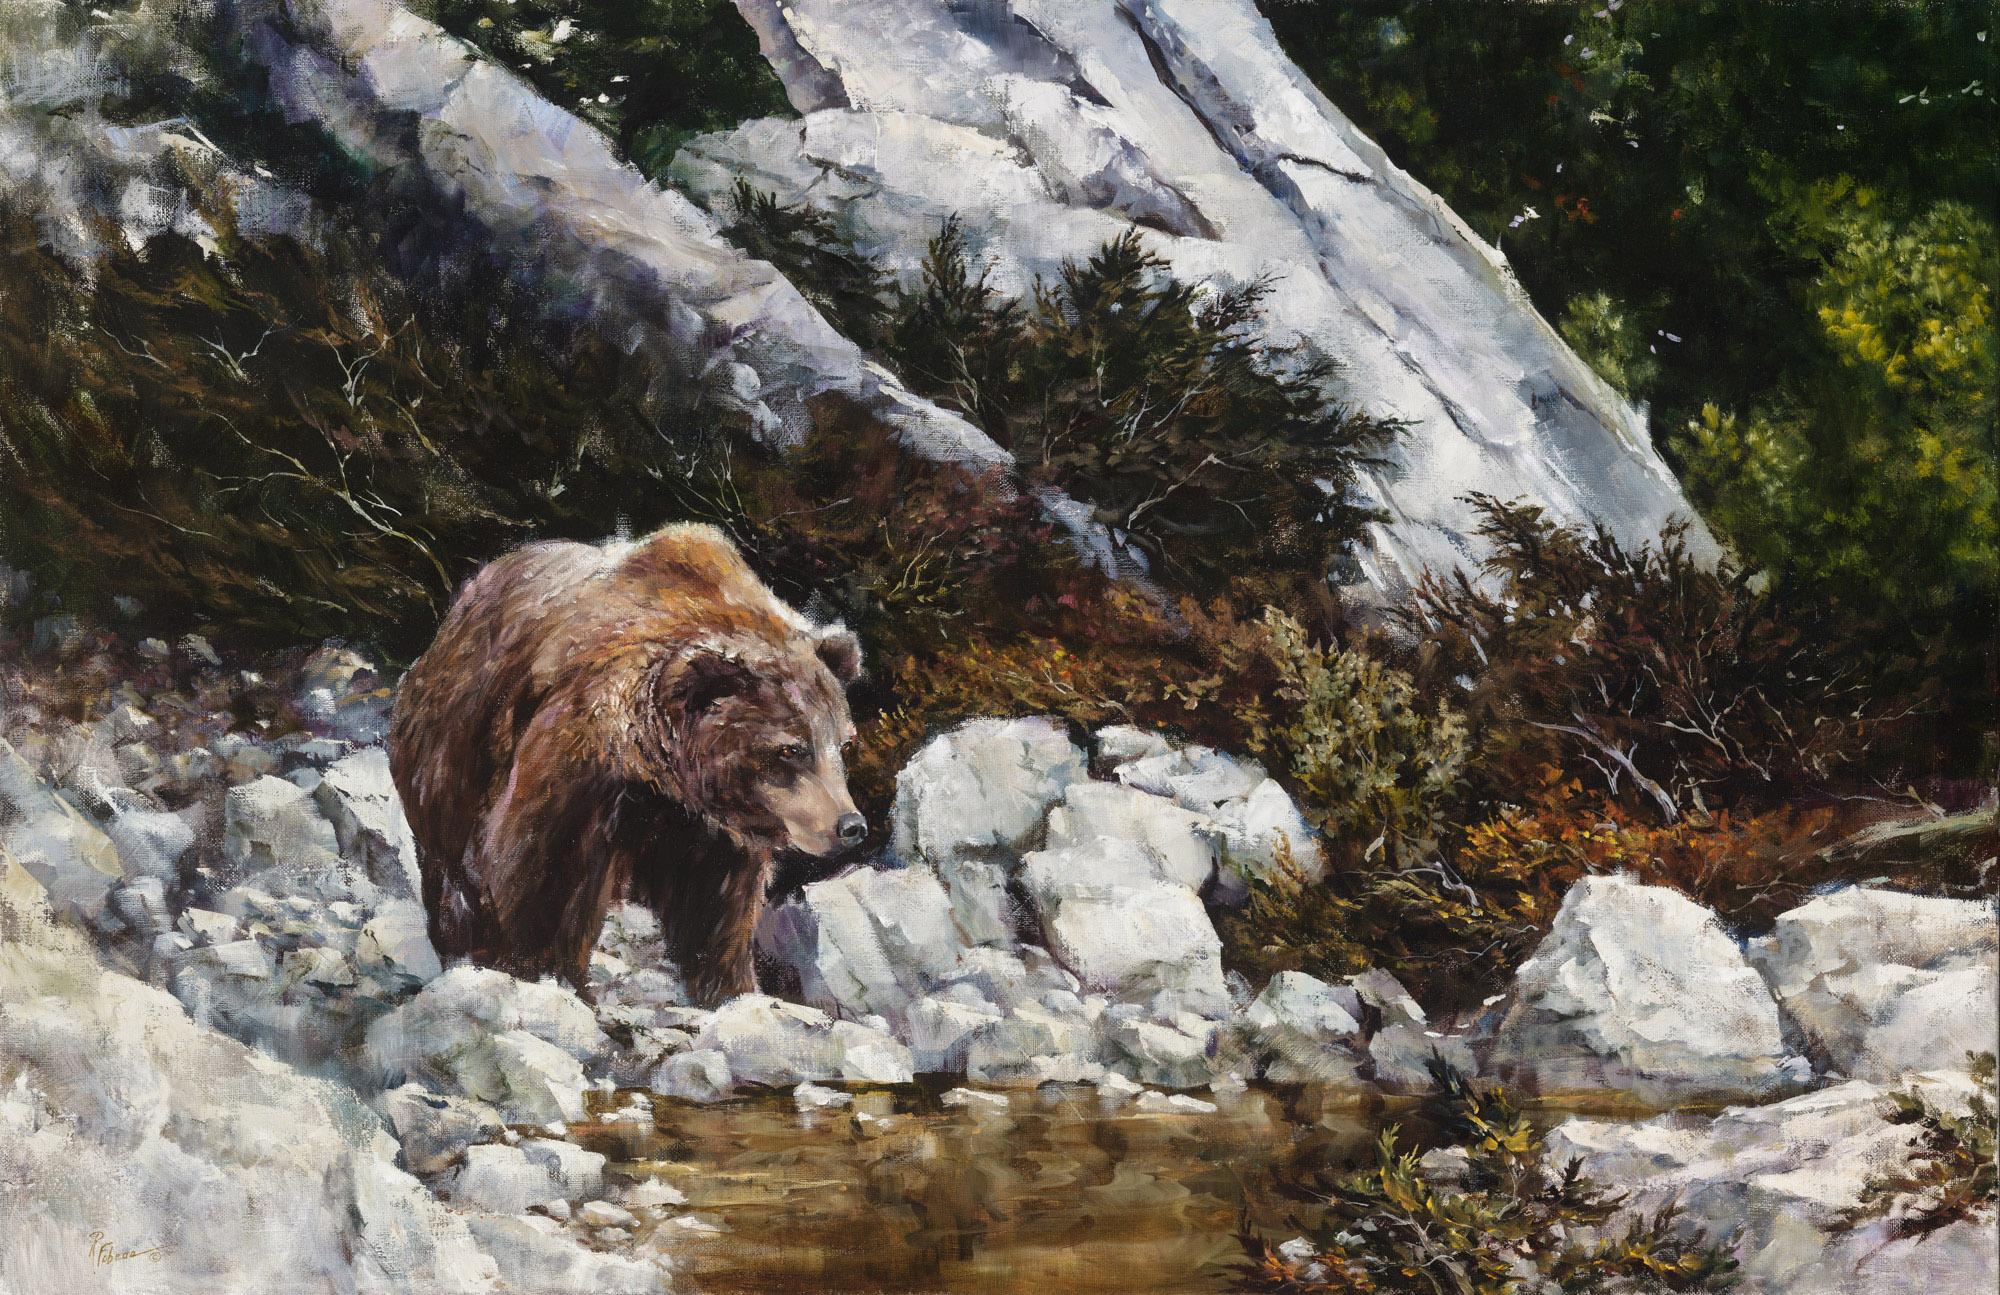 "Afternoon Drink", Robert Fobear, Oil on Linen, Wildlife, Forest, Bear, Creek